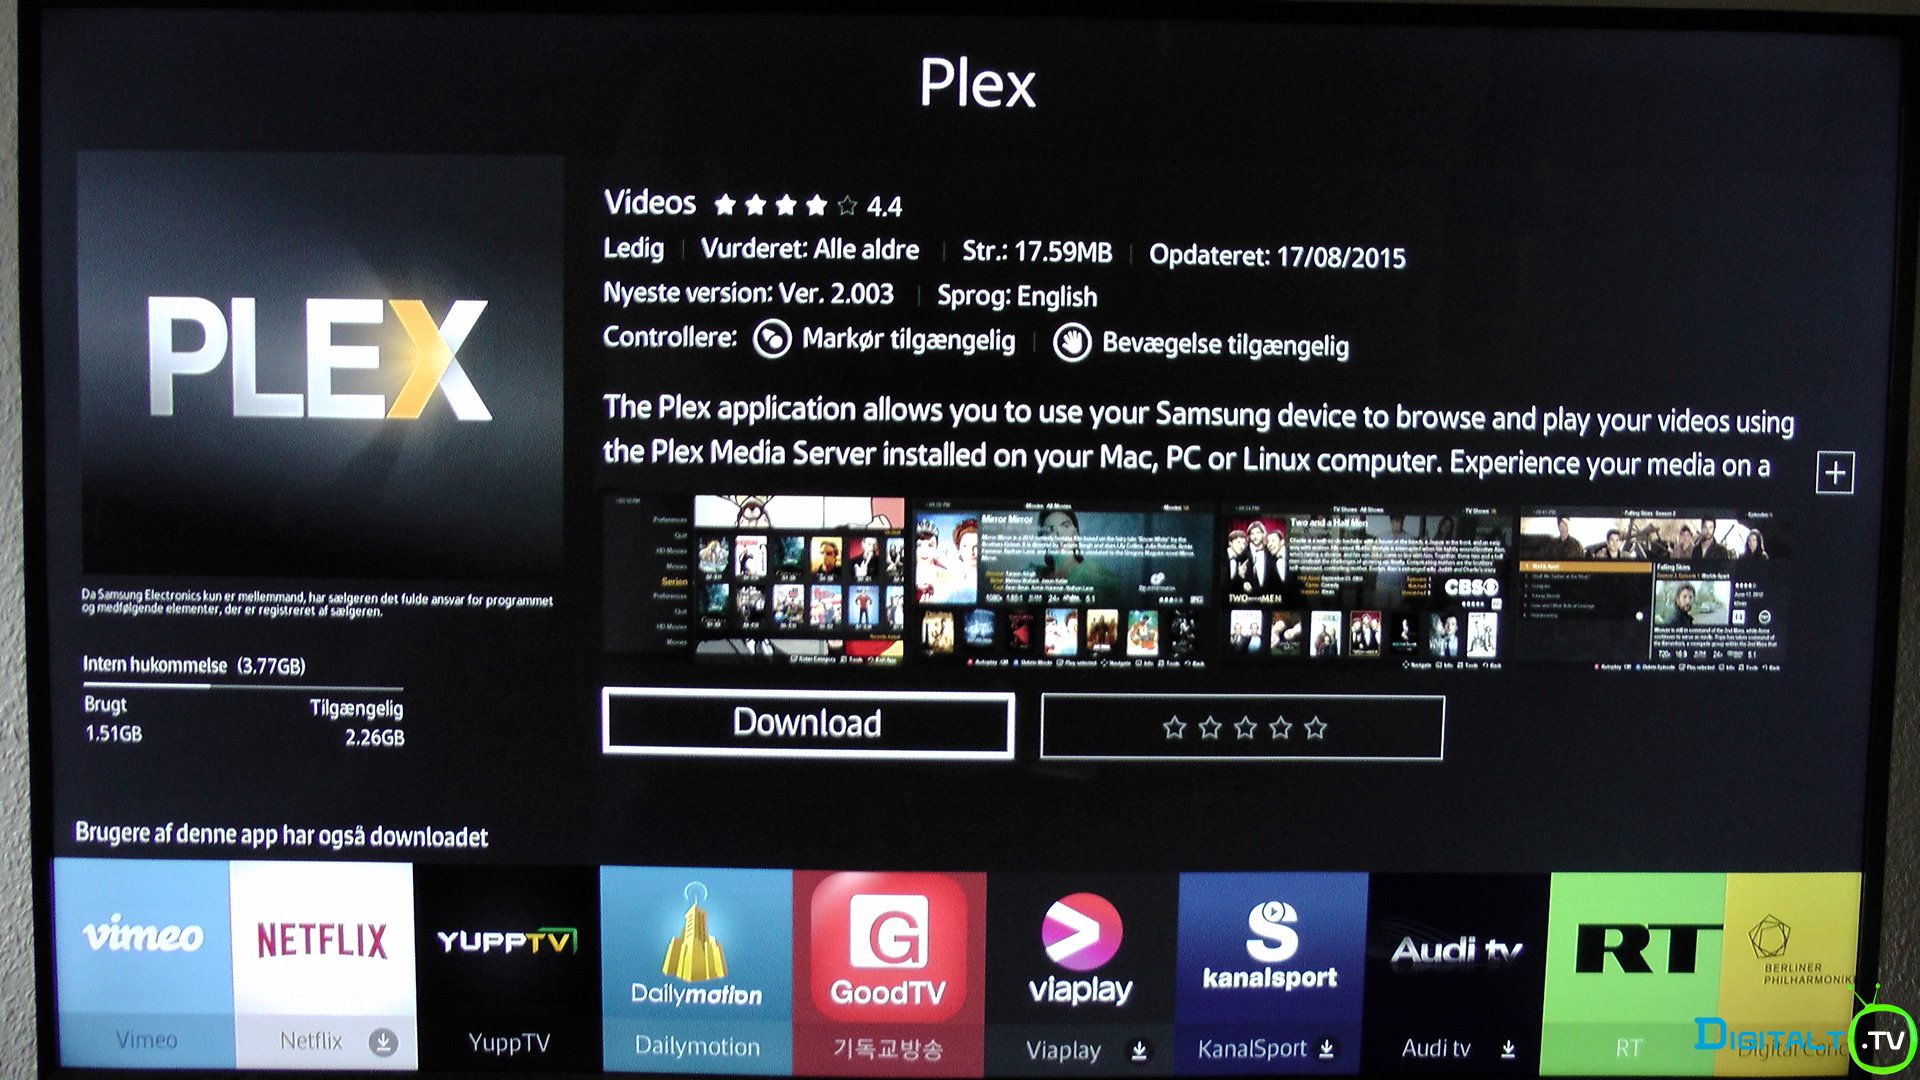 Samsung Plex TV app Tizen TV